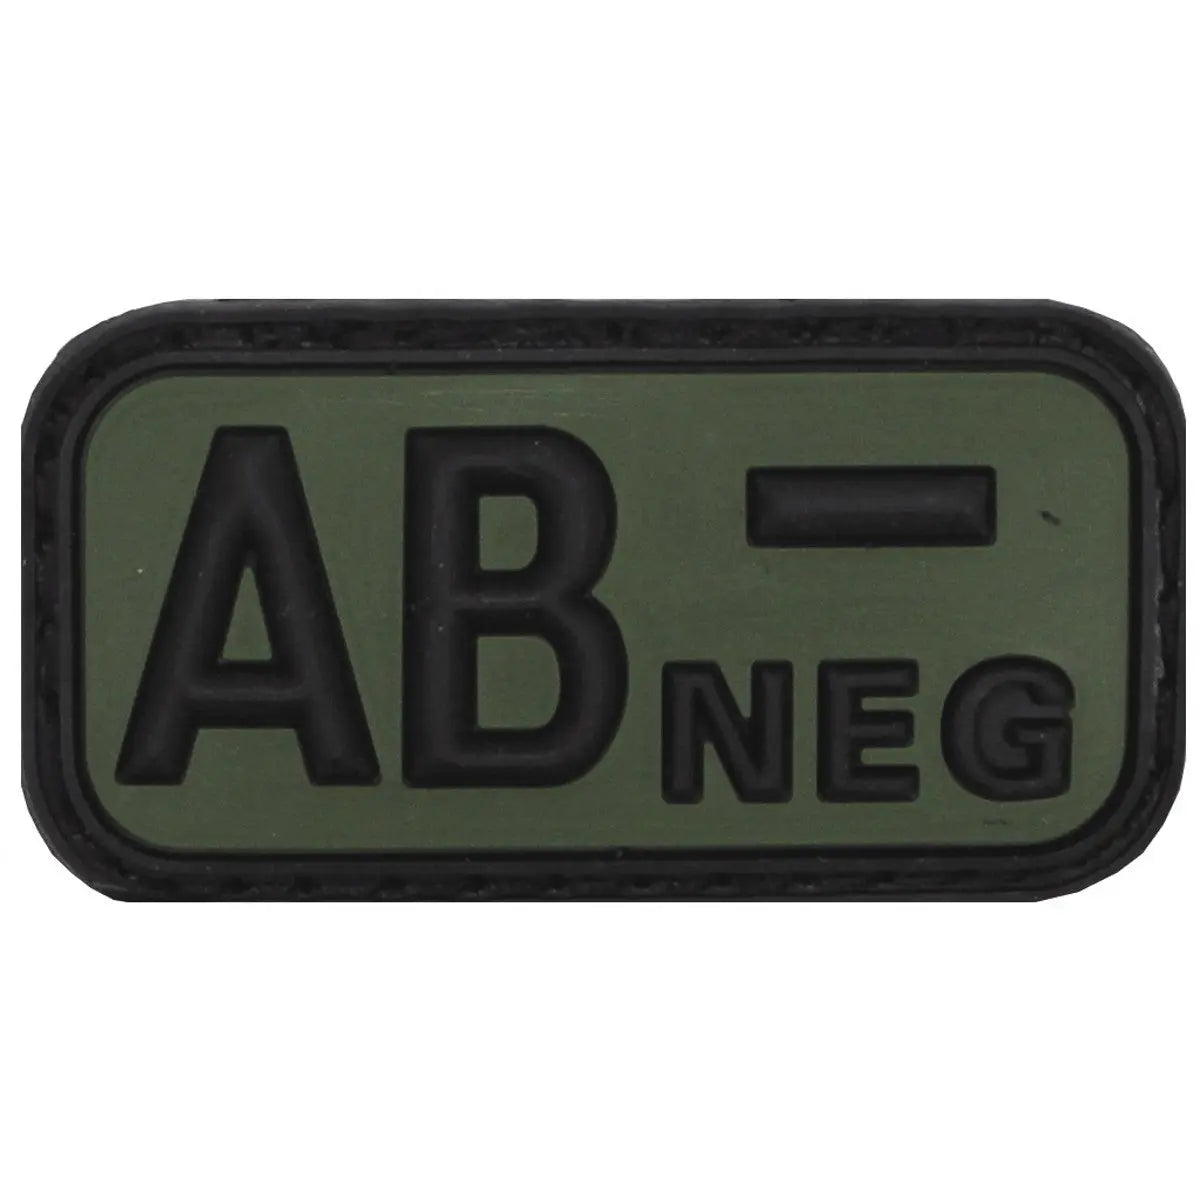 Velcro Patch, black-OD green, blood group "AB NEG", 3D